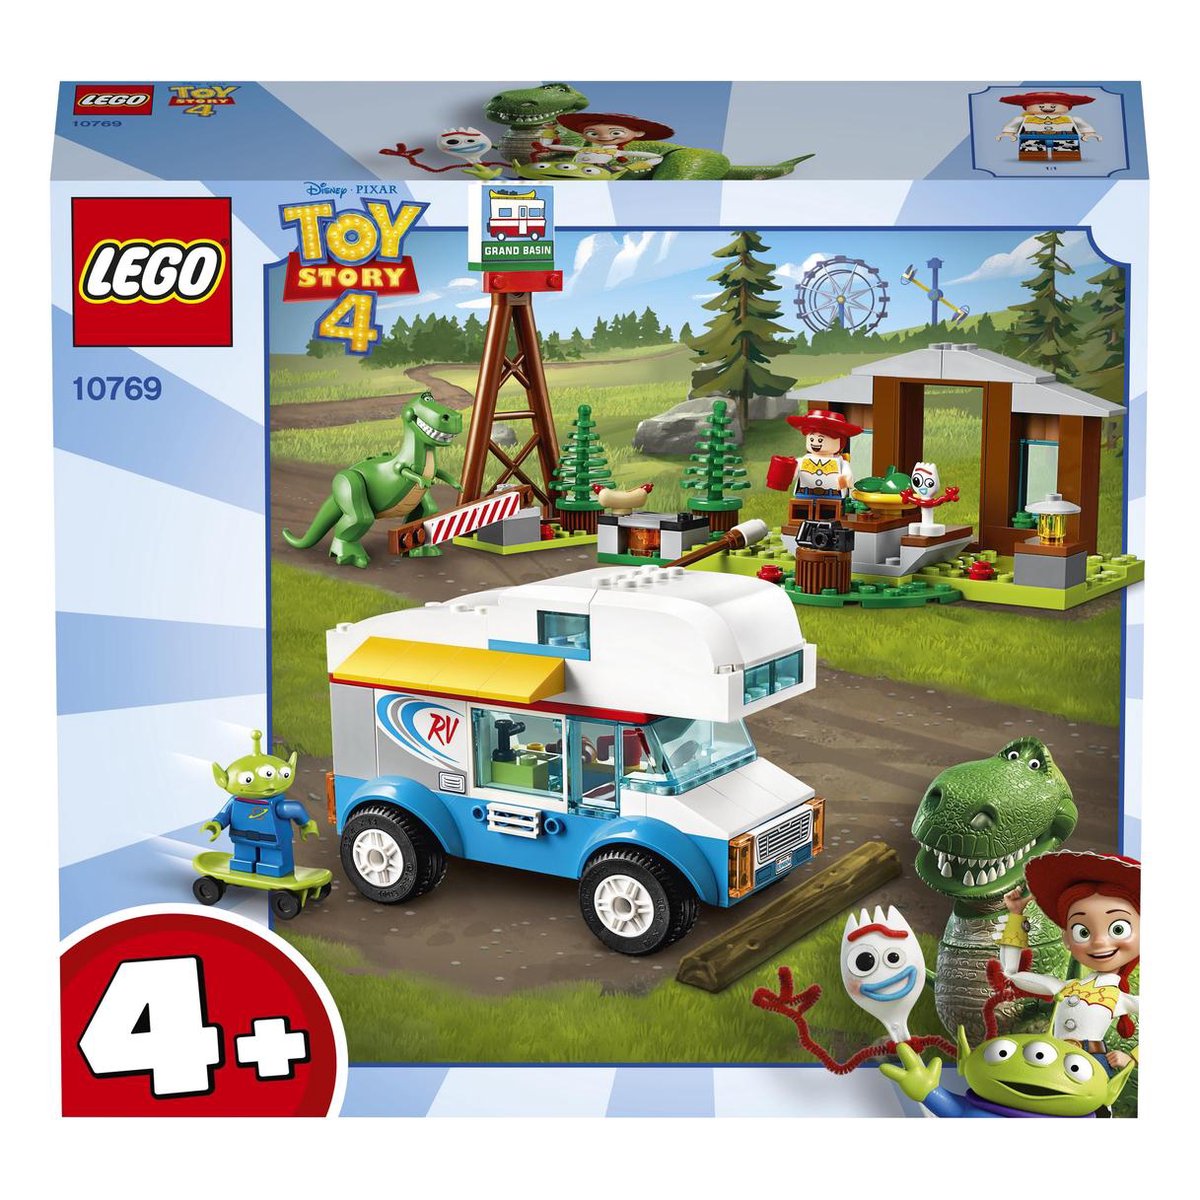 LEGO 4+ Toy Story 4 Campervakantie - 10769 | bol